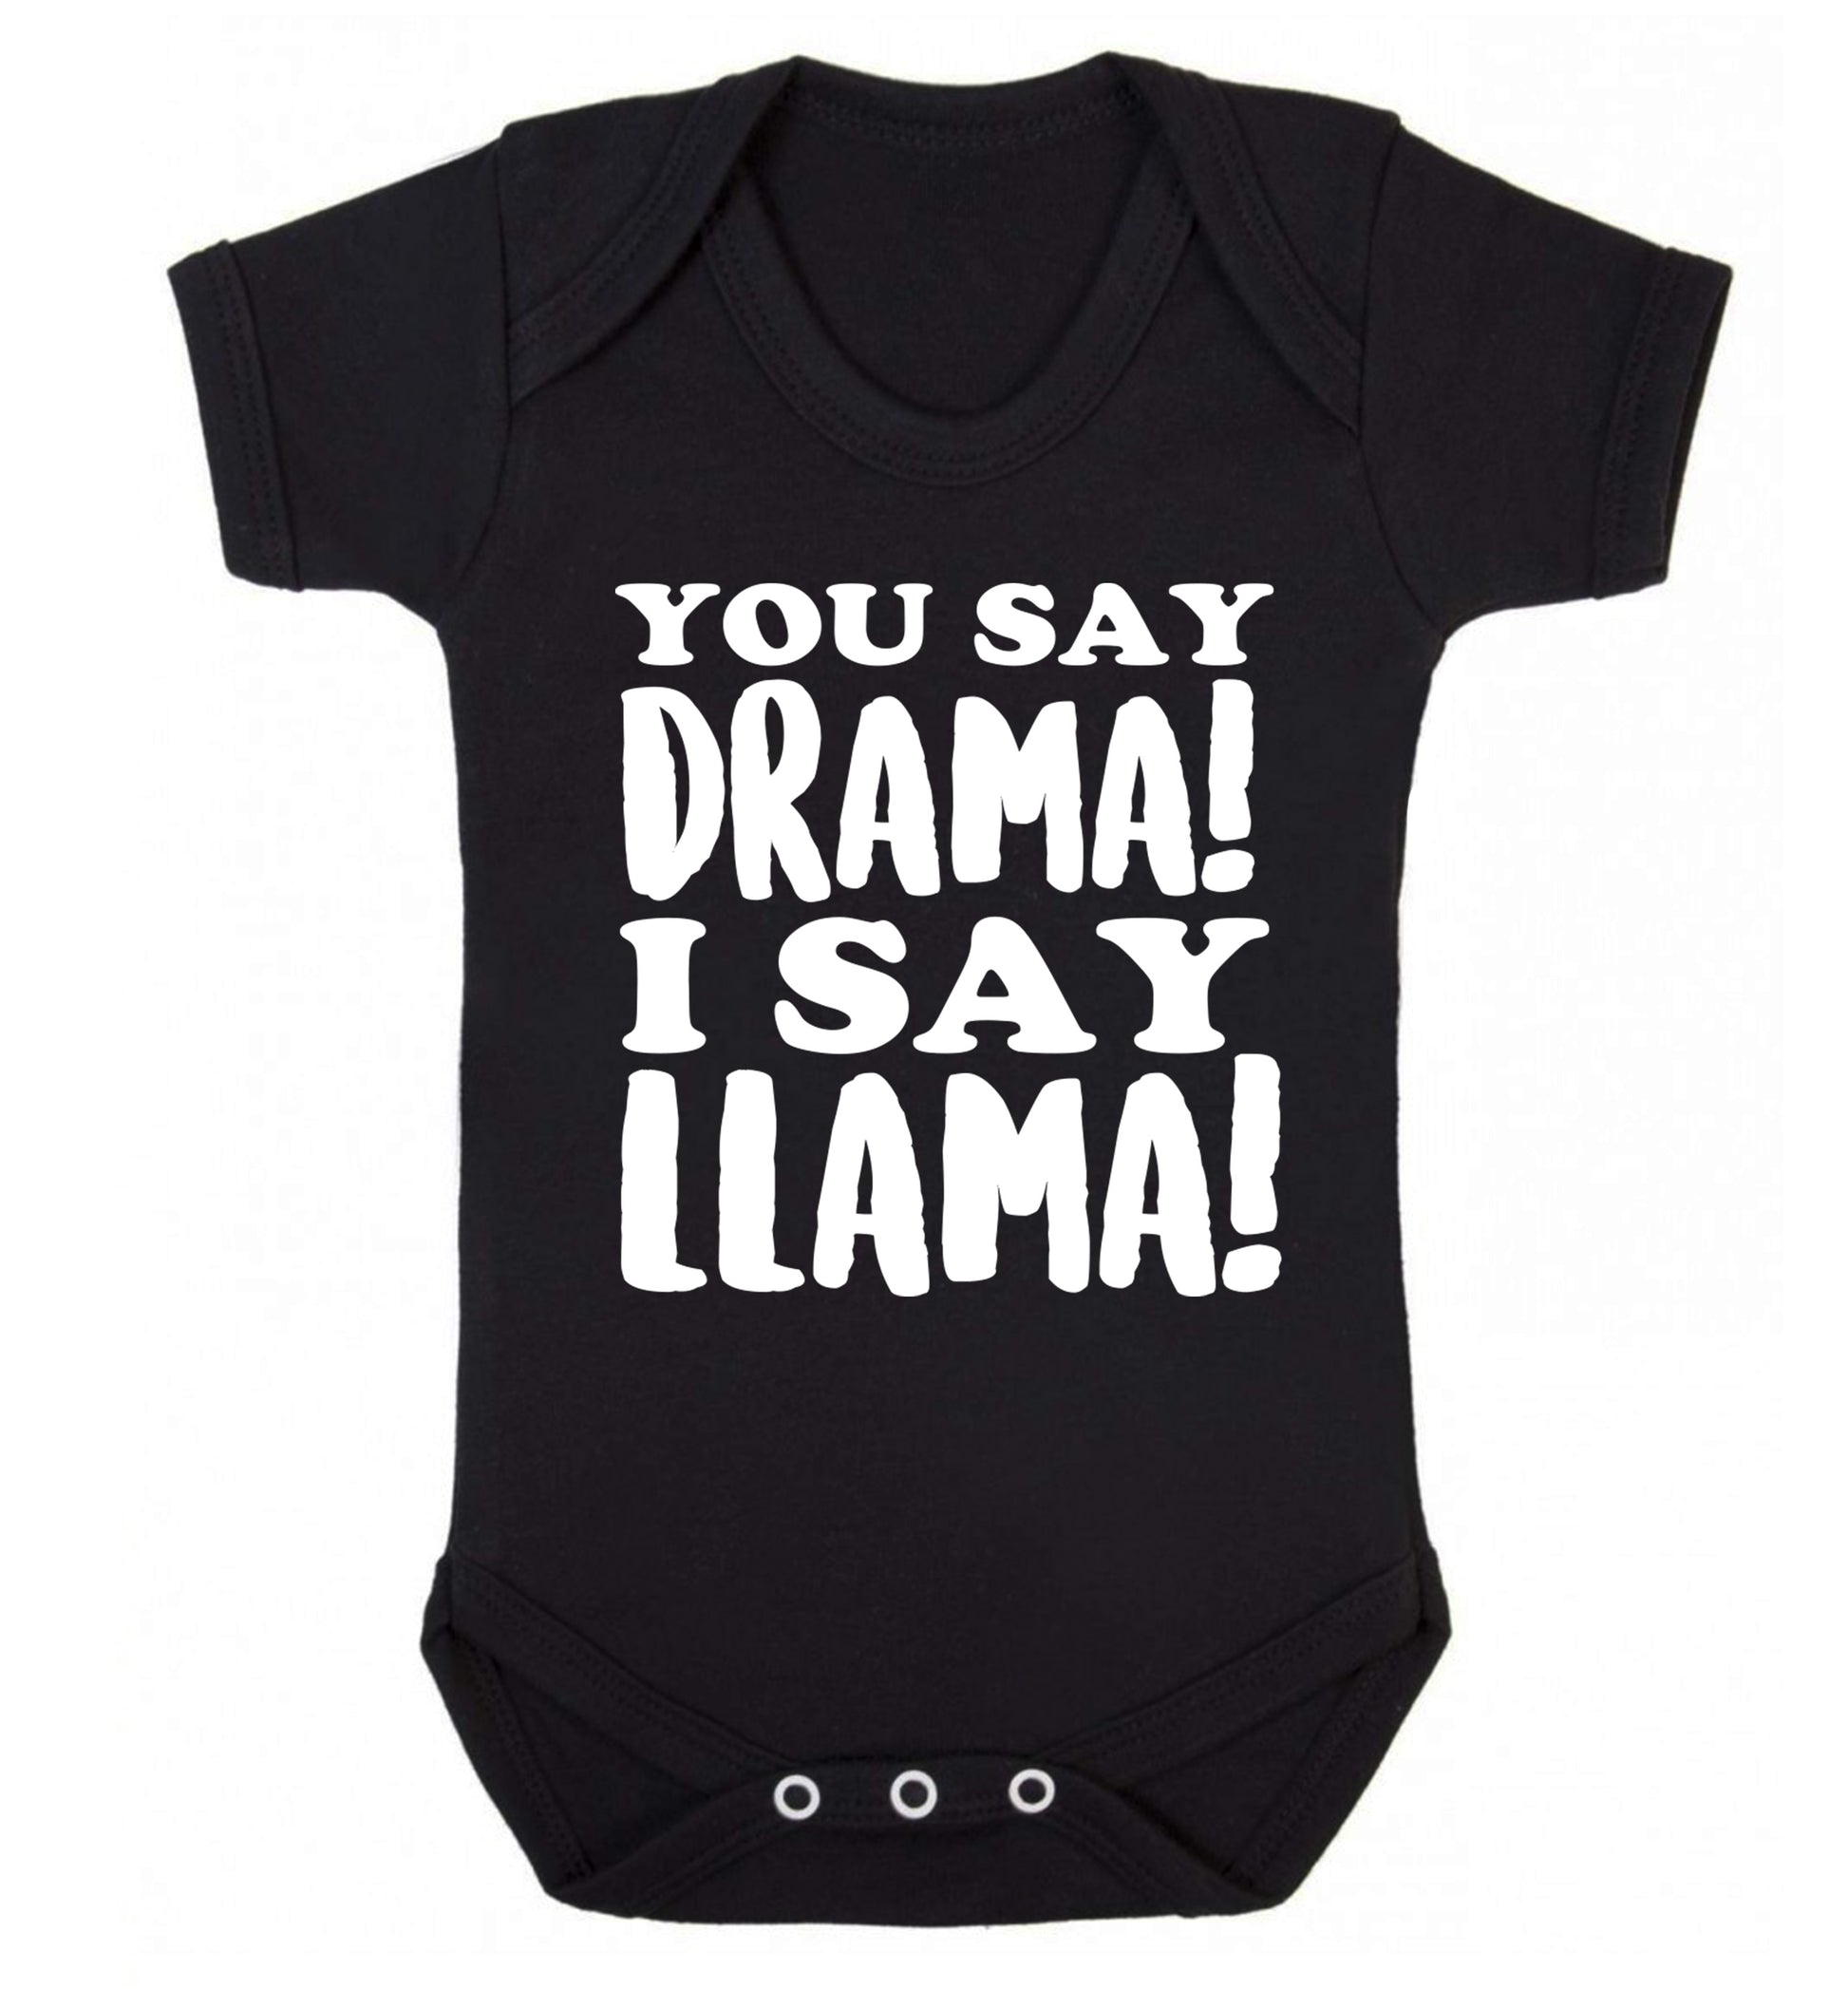 You say drama I say llama! Baby Vest black 18-24 months